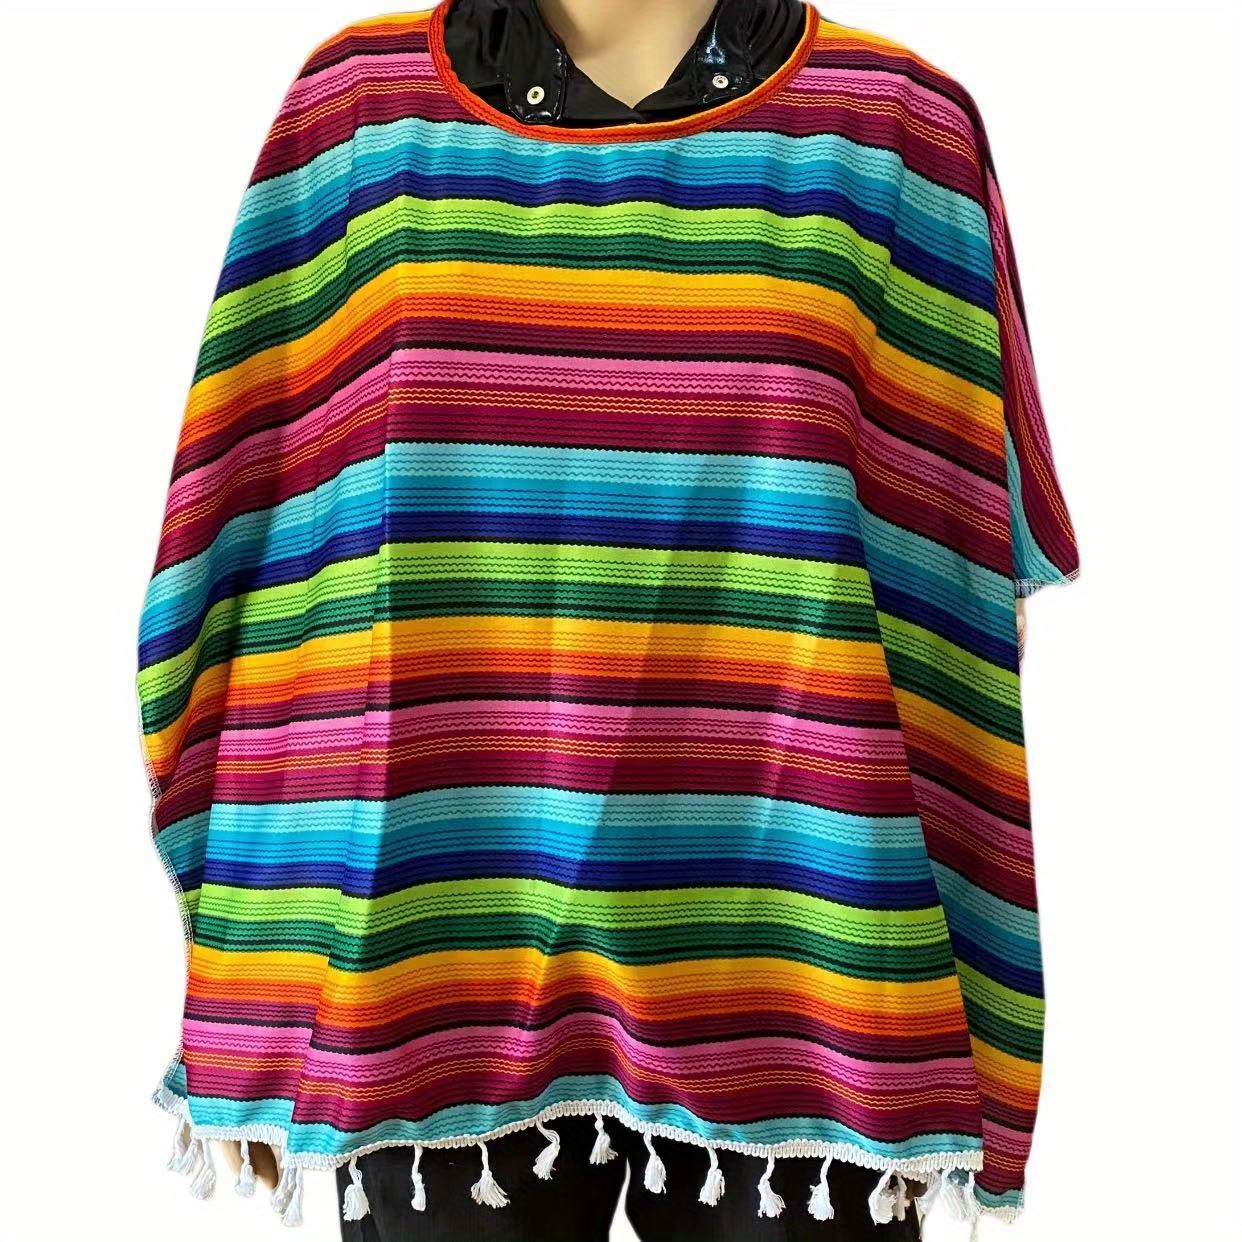 https://img.kwcdn.com/product/colored-mexican-poncho-costume-accessory/d69d2f15w98k18-2e4bf826/Fancyalgo/VirtualModelMatting/b62791b5b352a278d6b5b062846bd70f.jpg